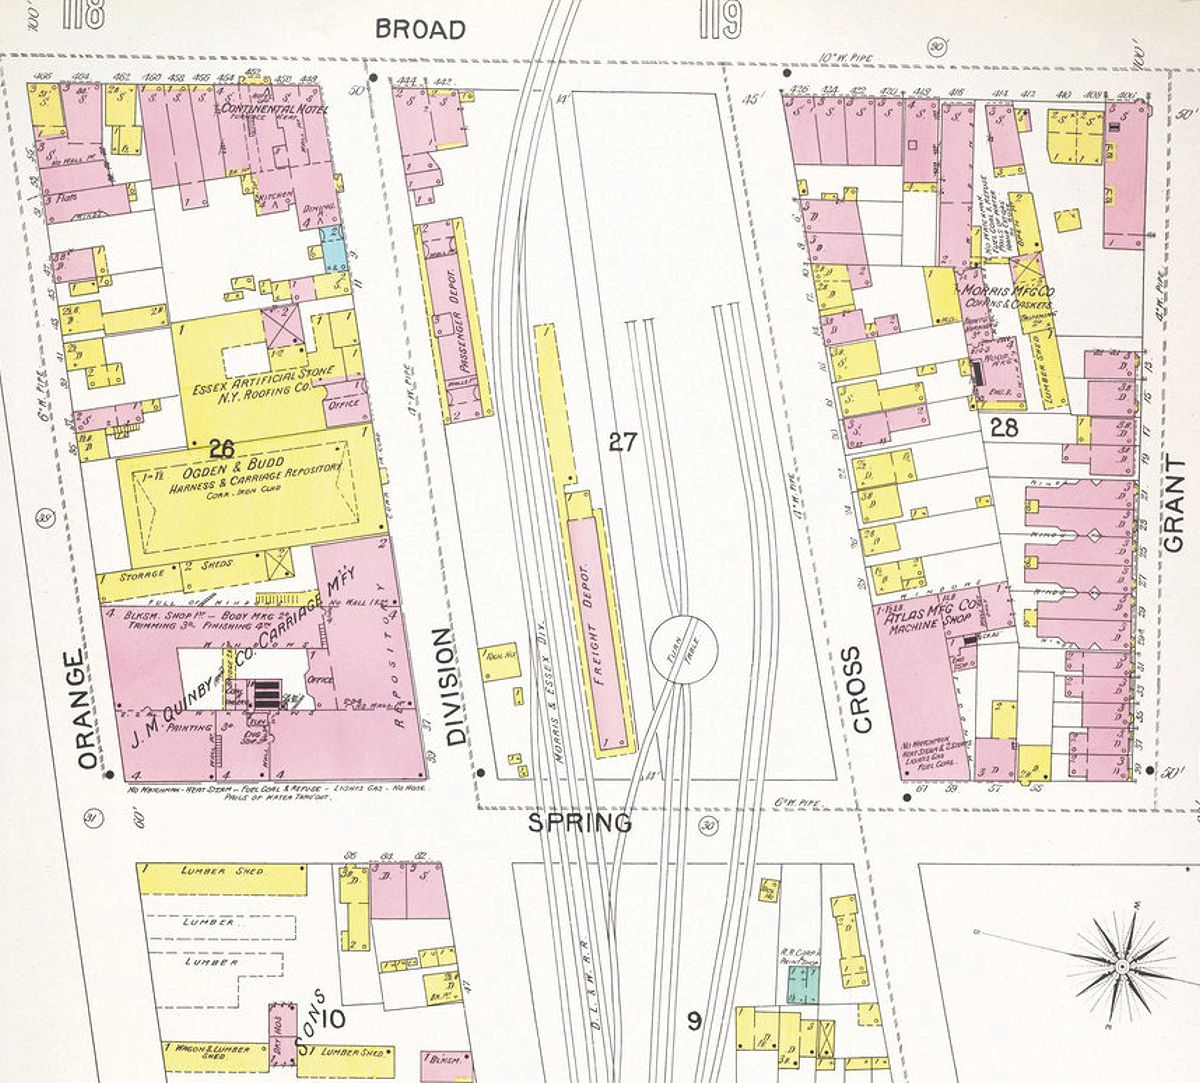 Broad Street Freightyard
1892 Map
